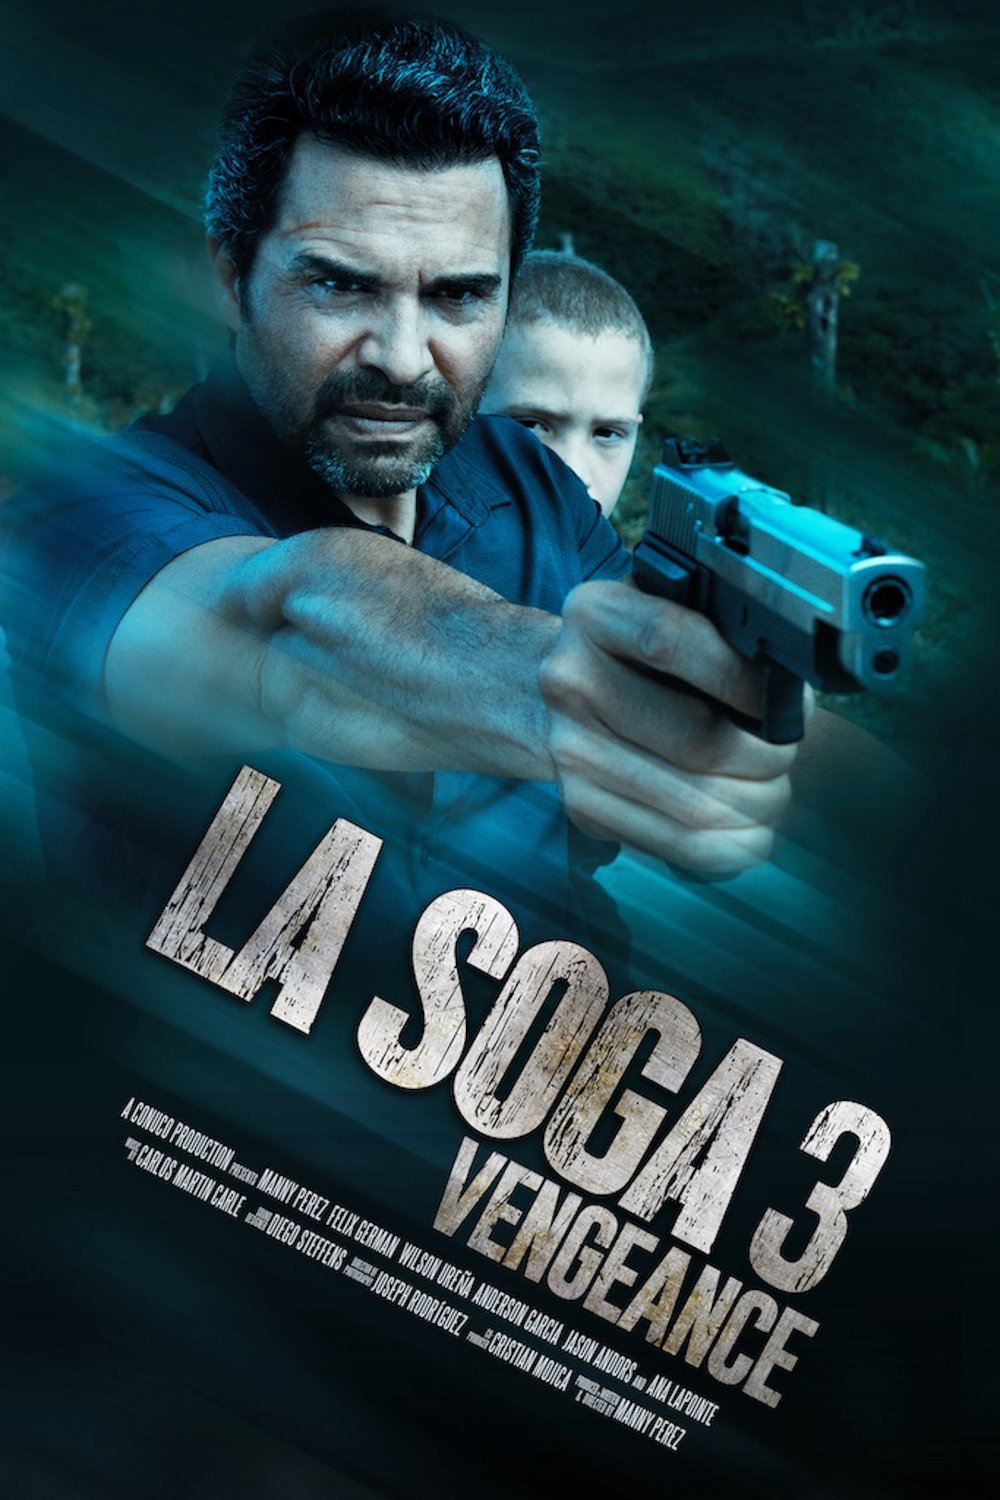 Spanish poster of the movie La Soga 3 Vengeance